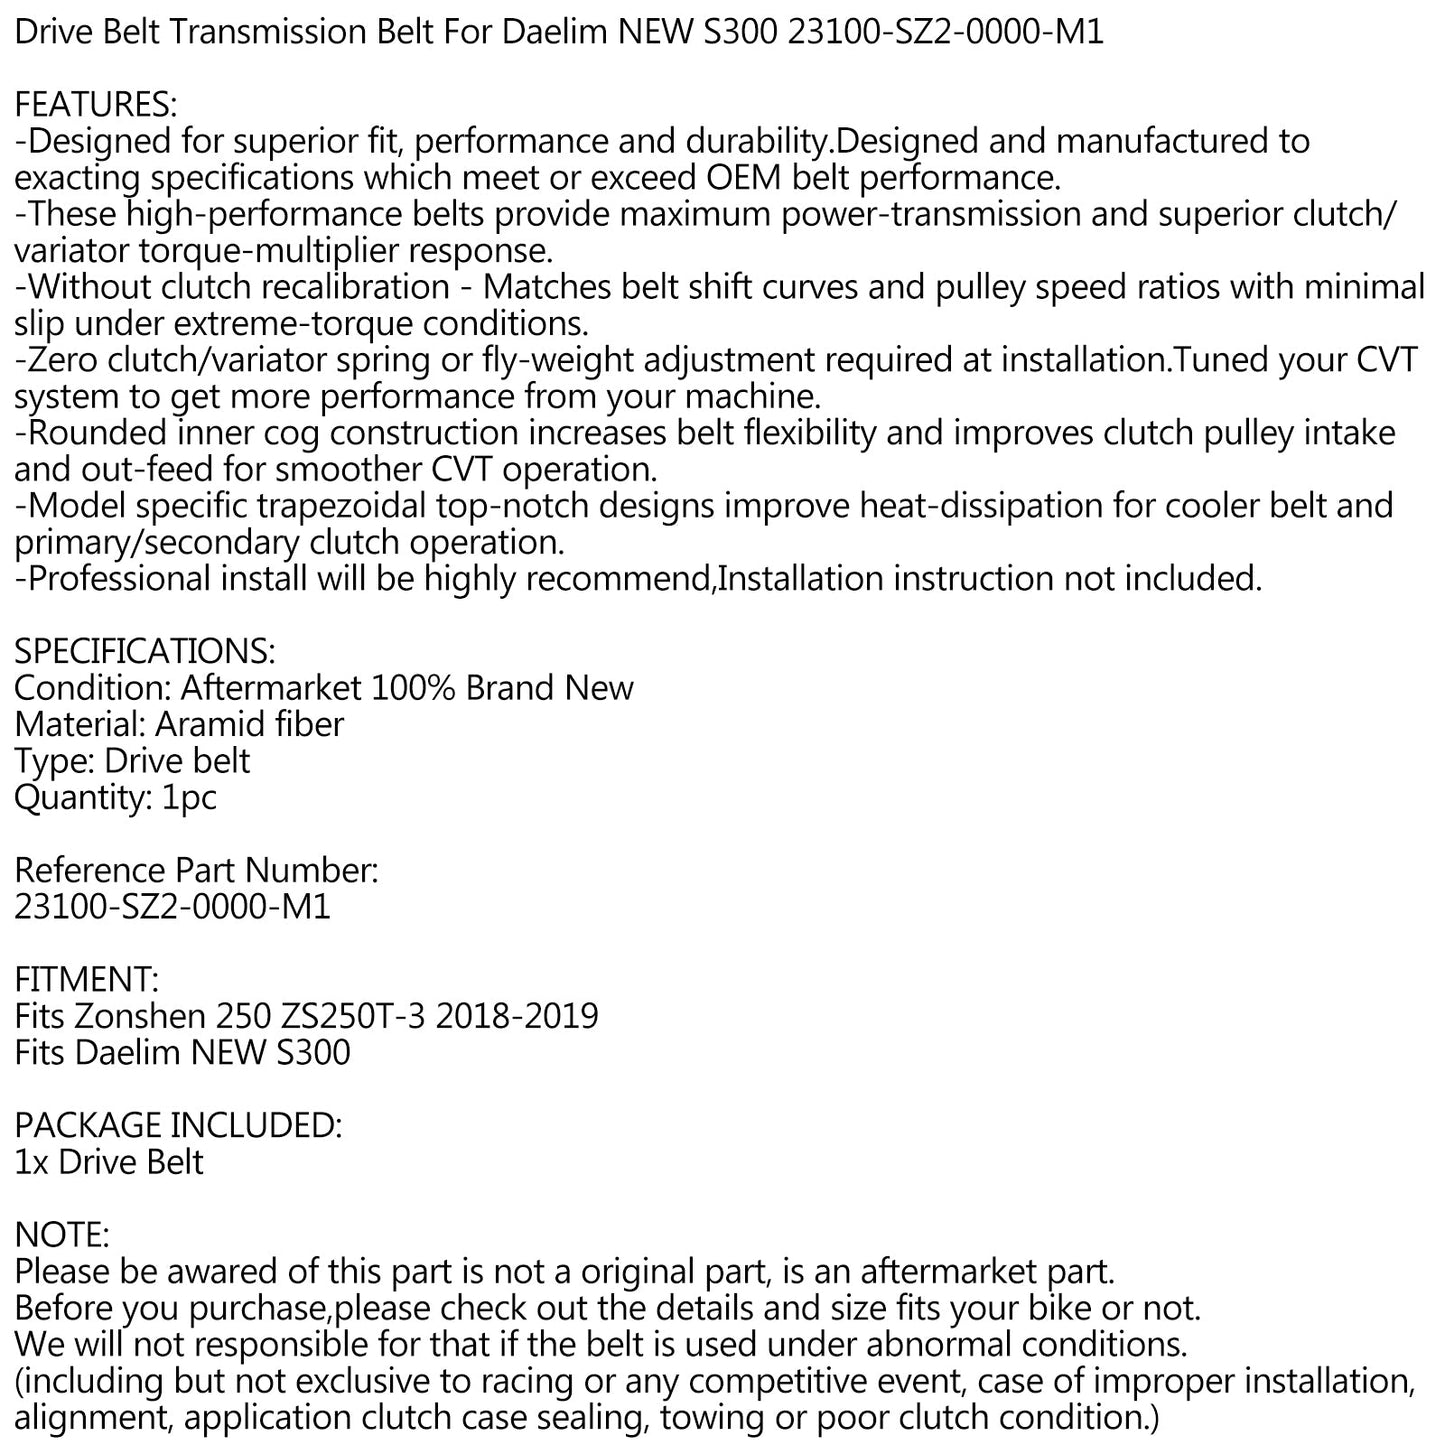 External Final Transmission Belt for Daelim NEW S300 23100-SZ2-0000-M1